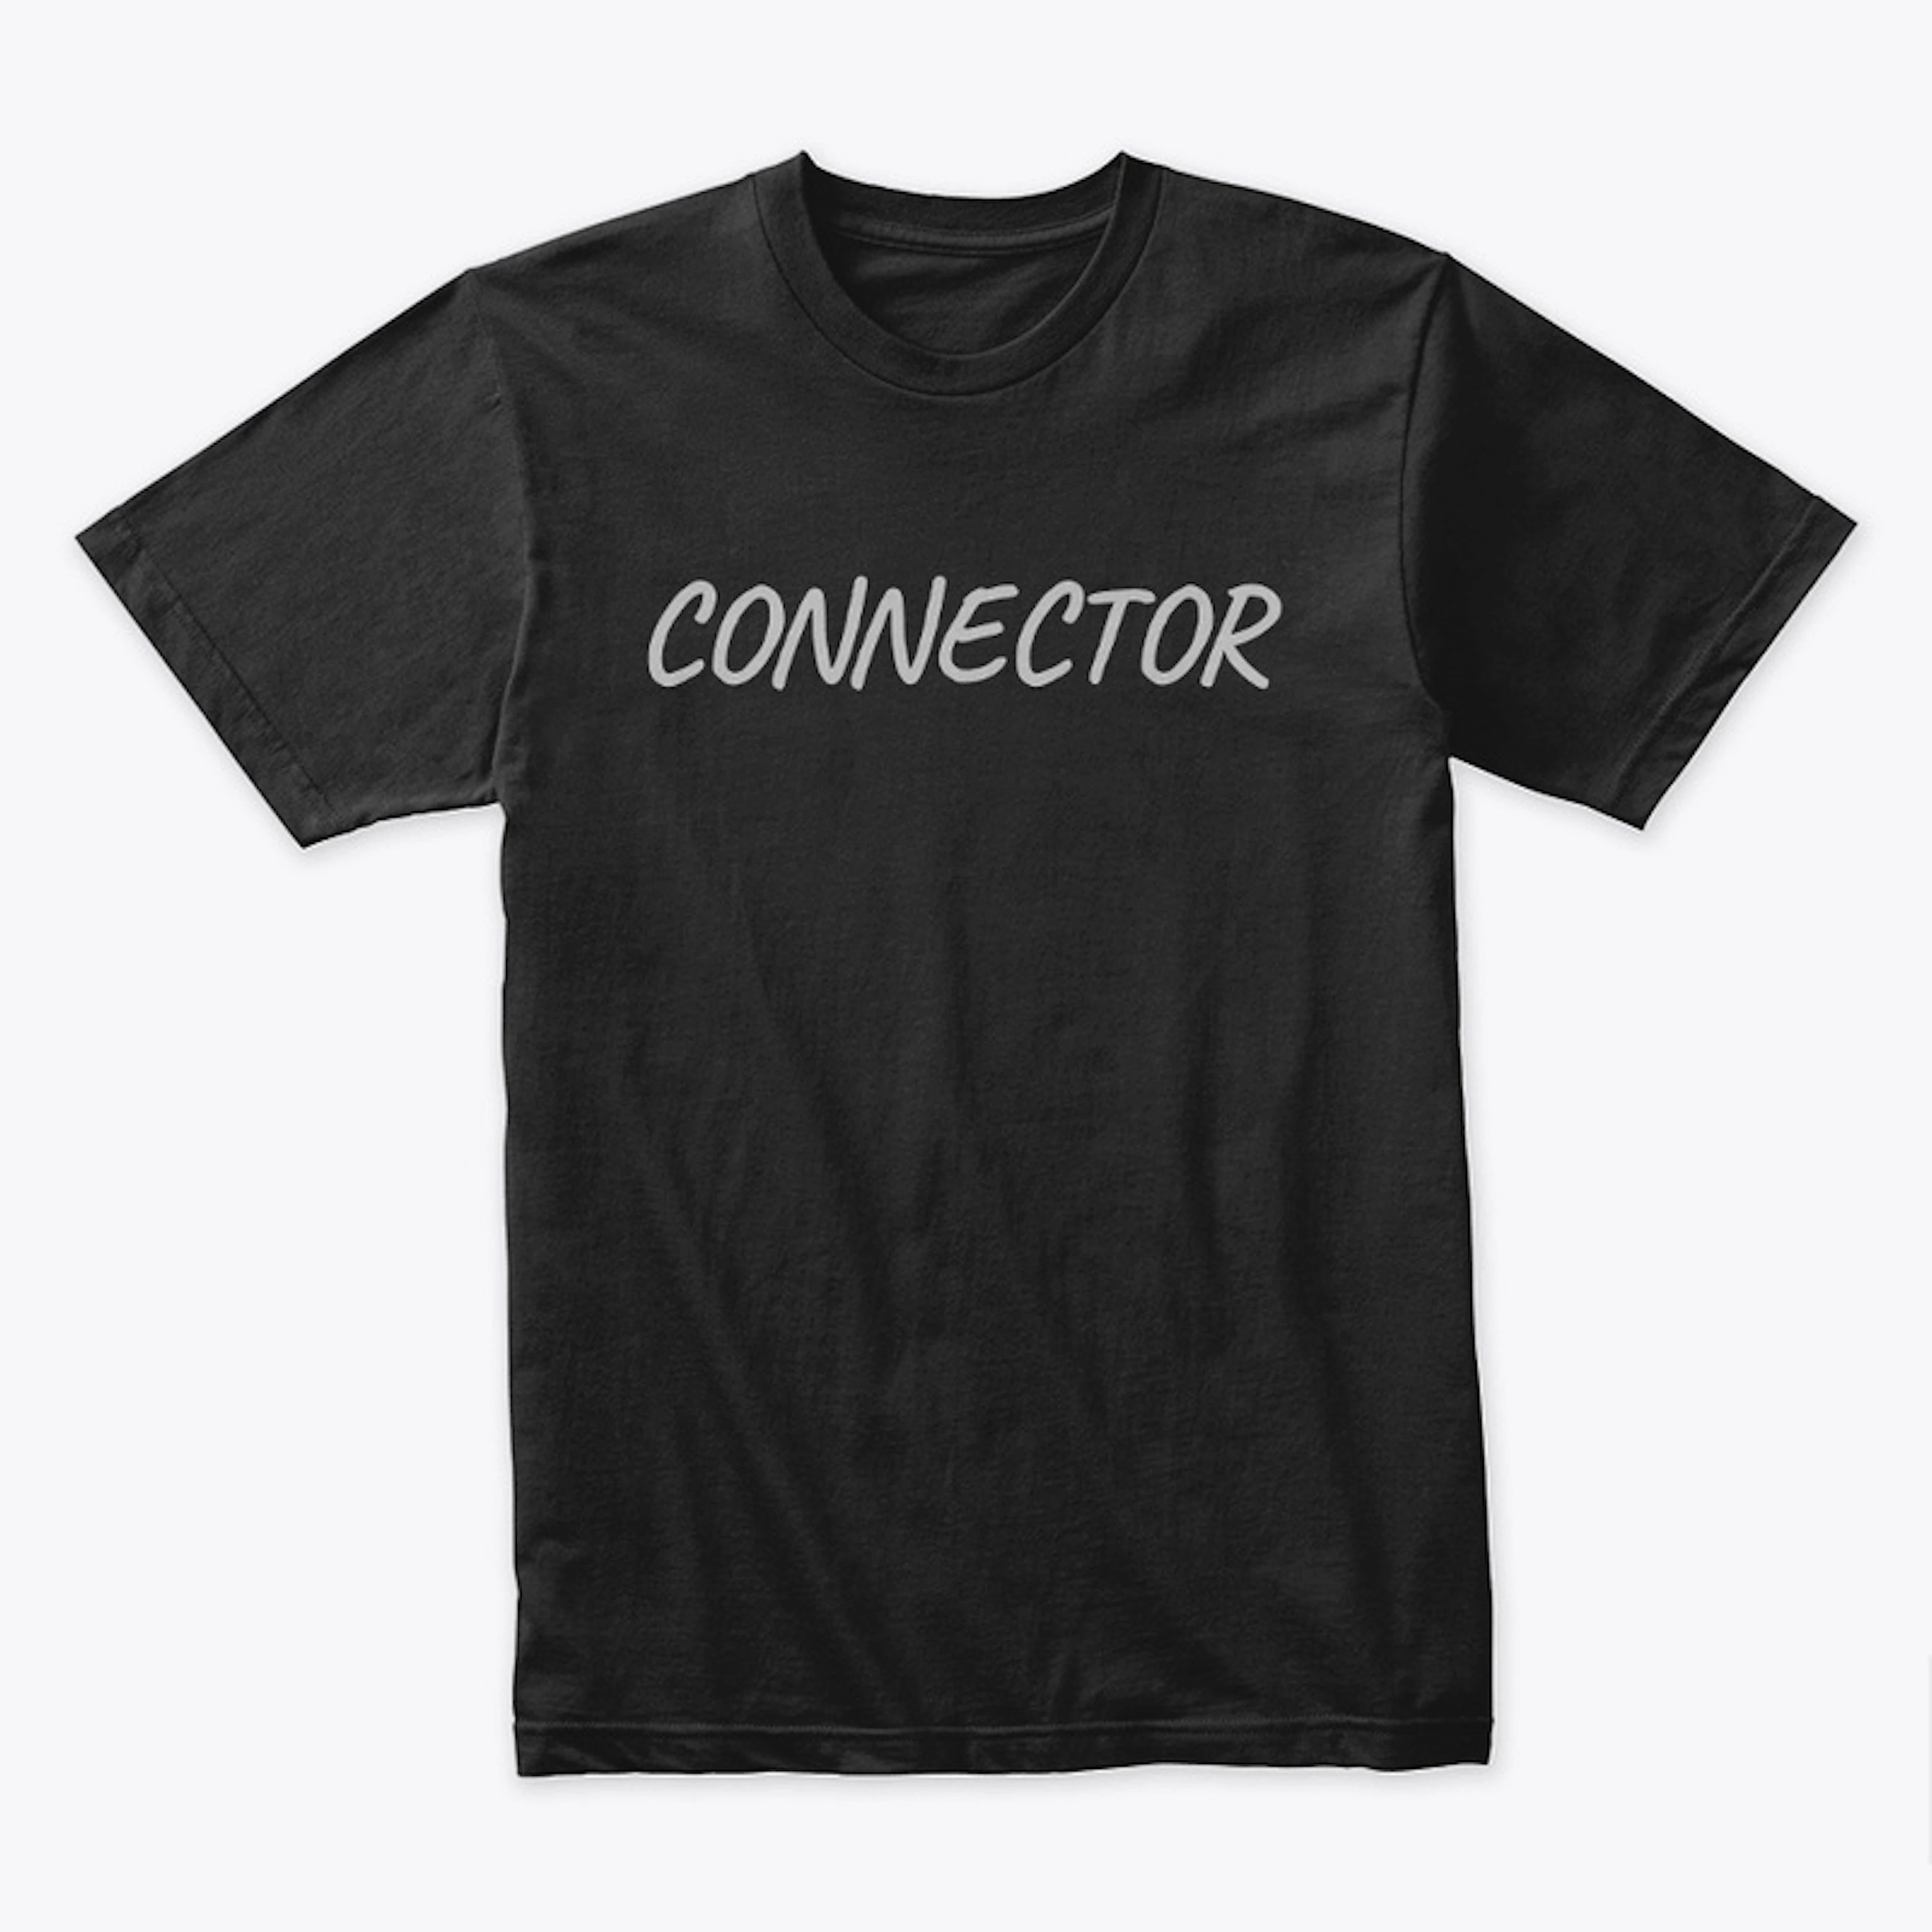 REI CONNECTOR